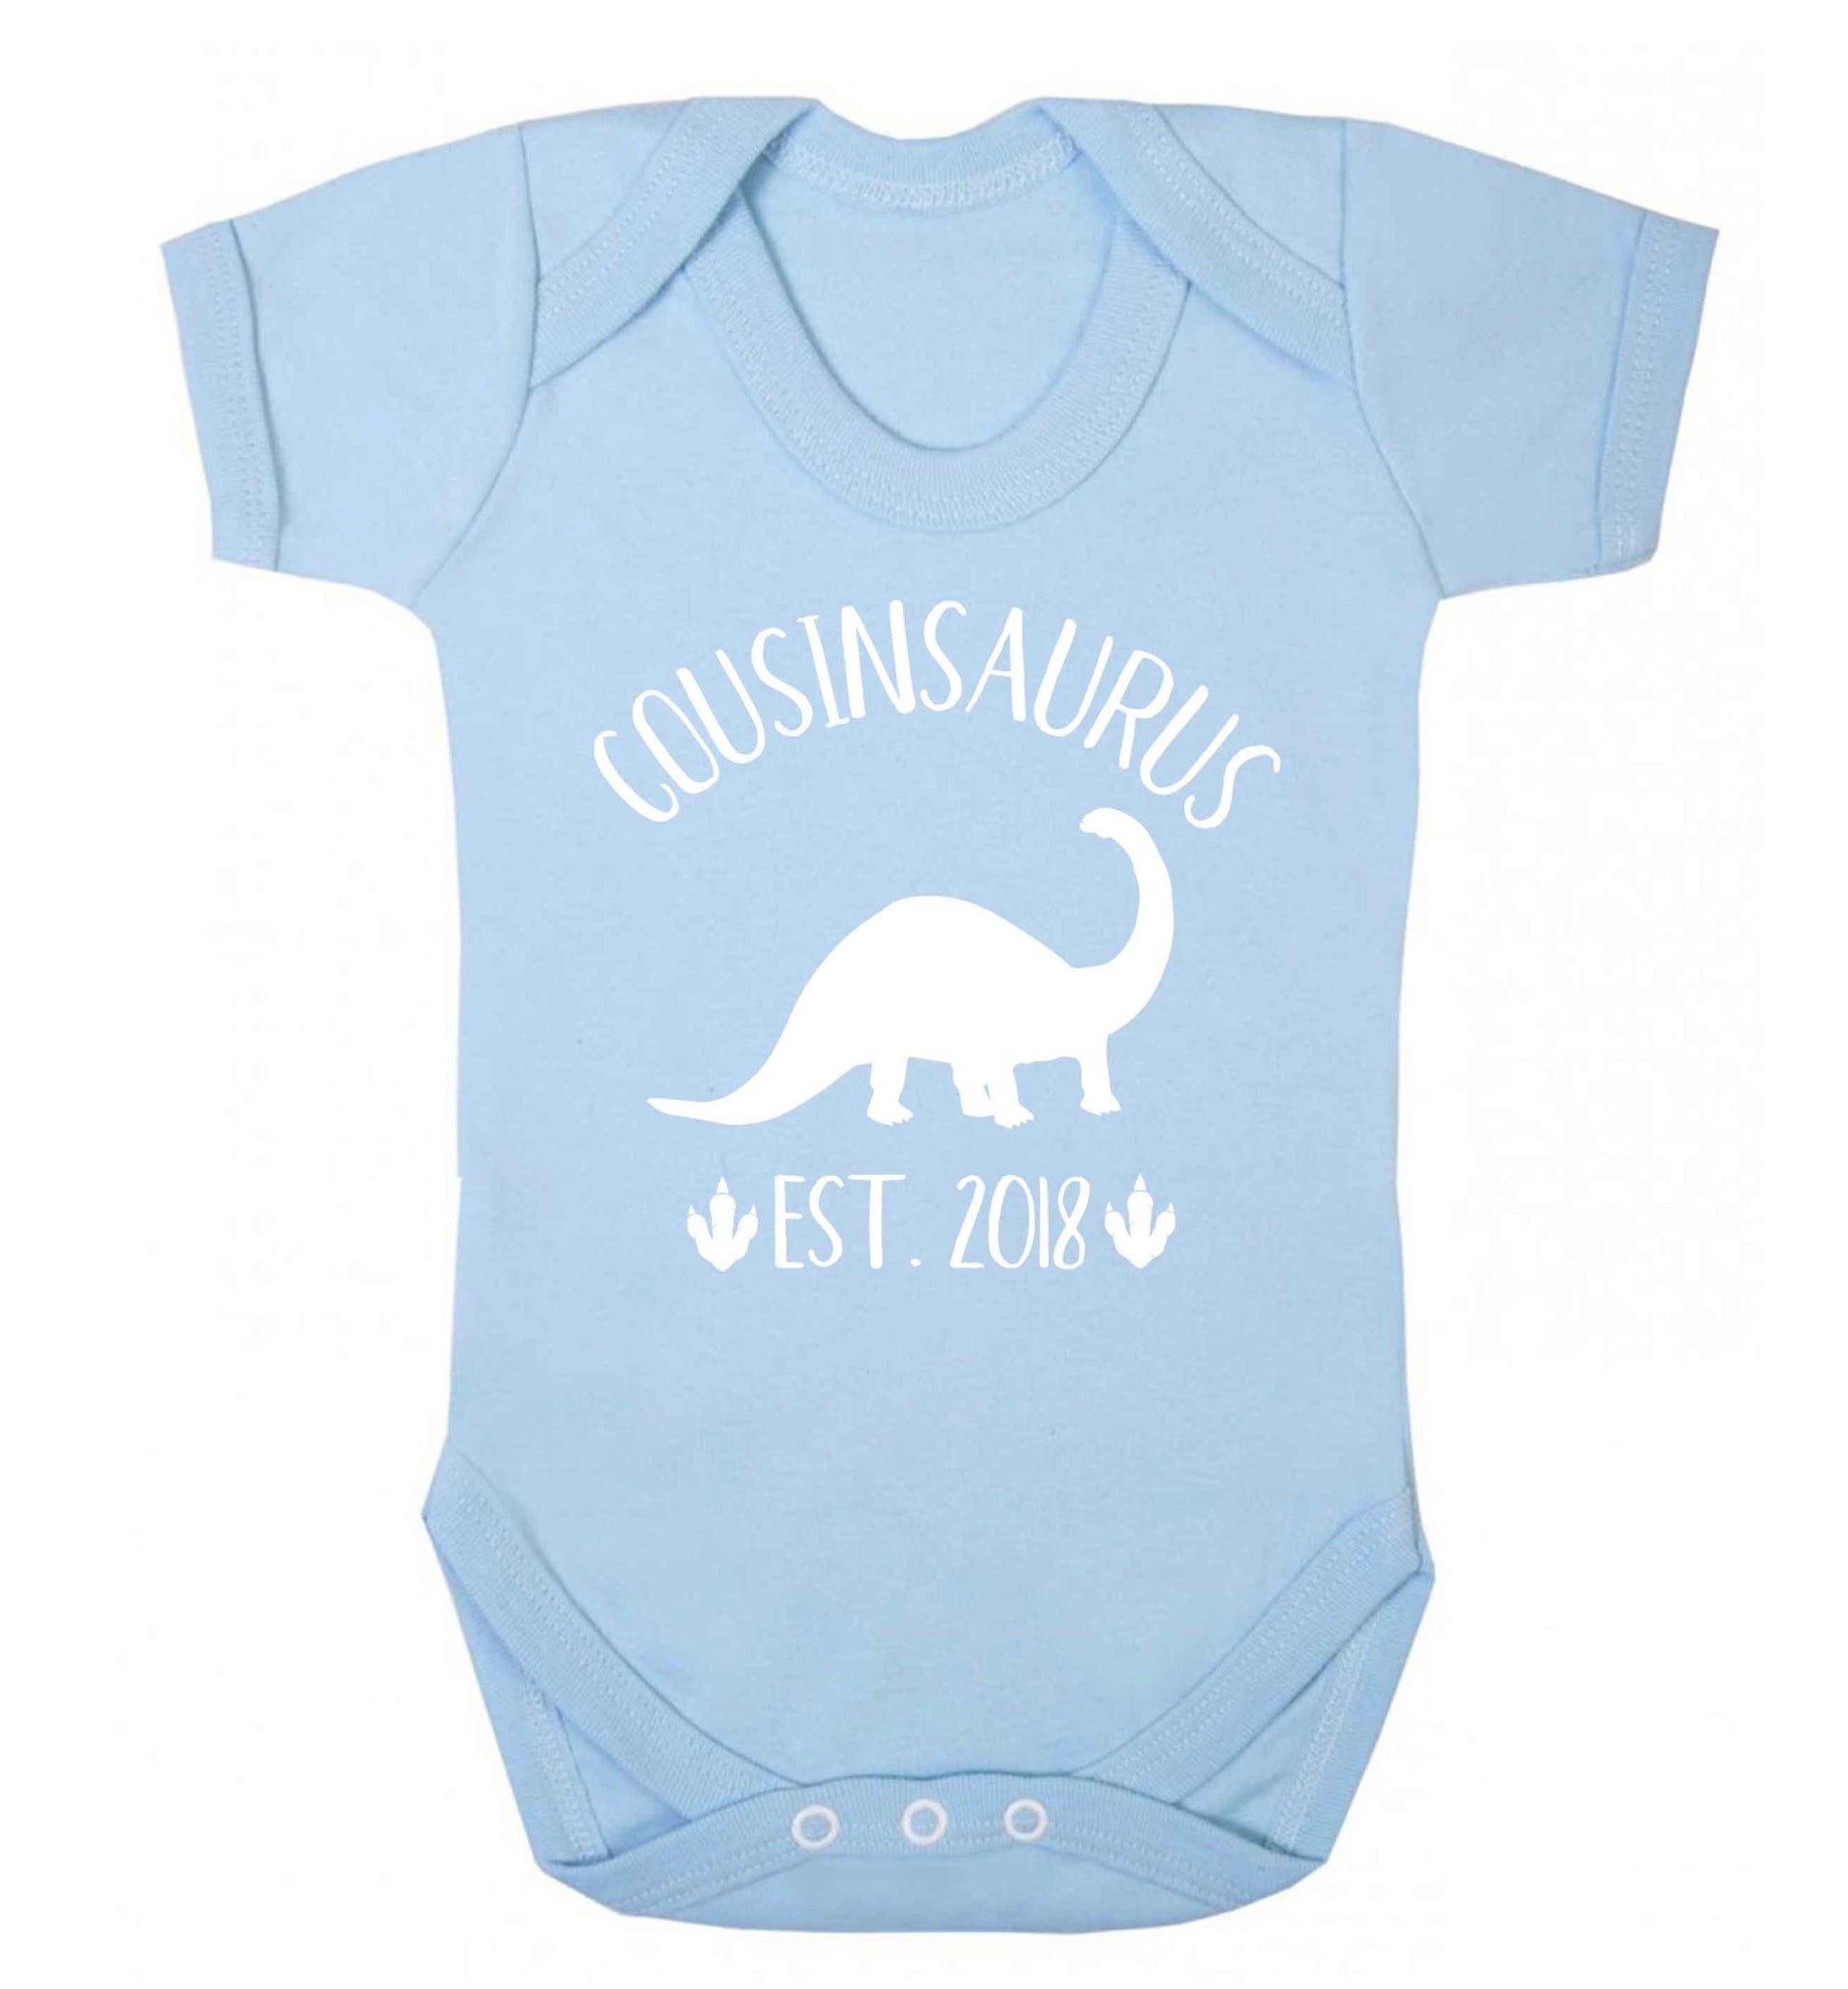 Personalised cousinsaurus since (custom date) Baby Vest pale blue 18-24 months